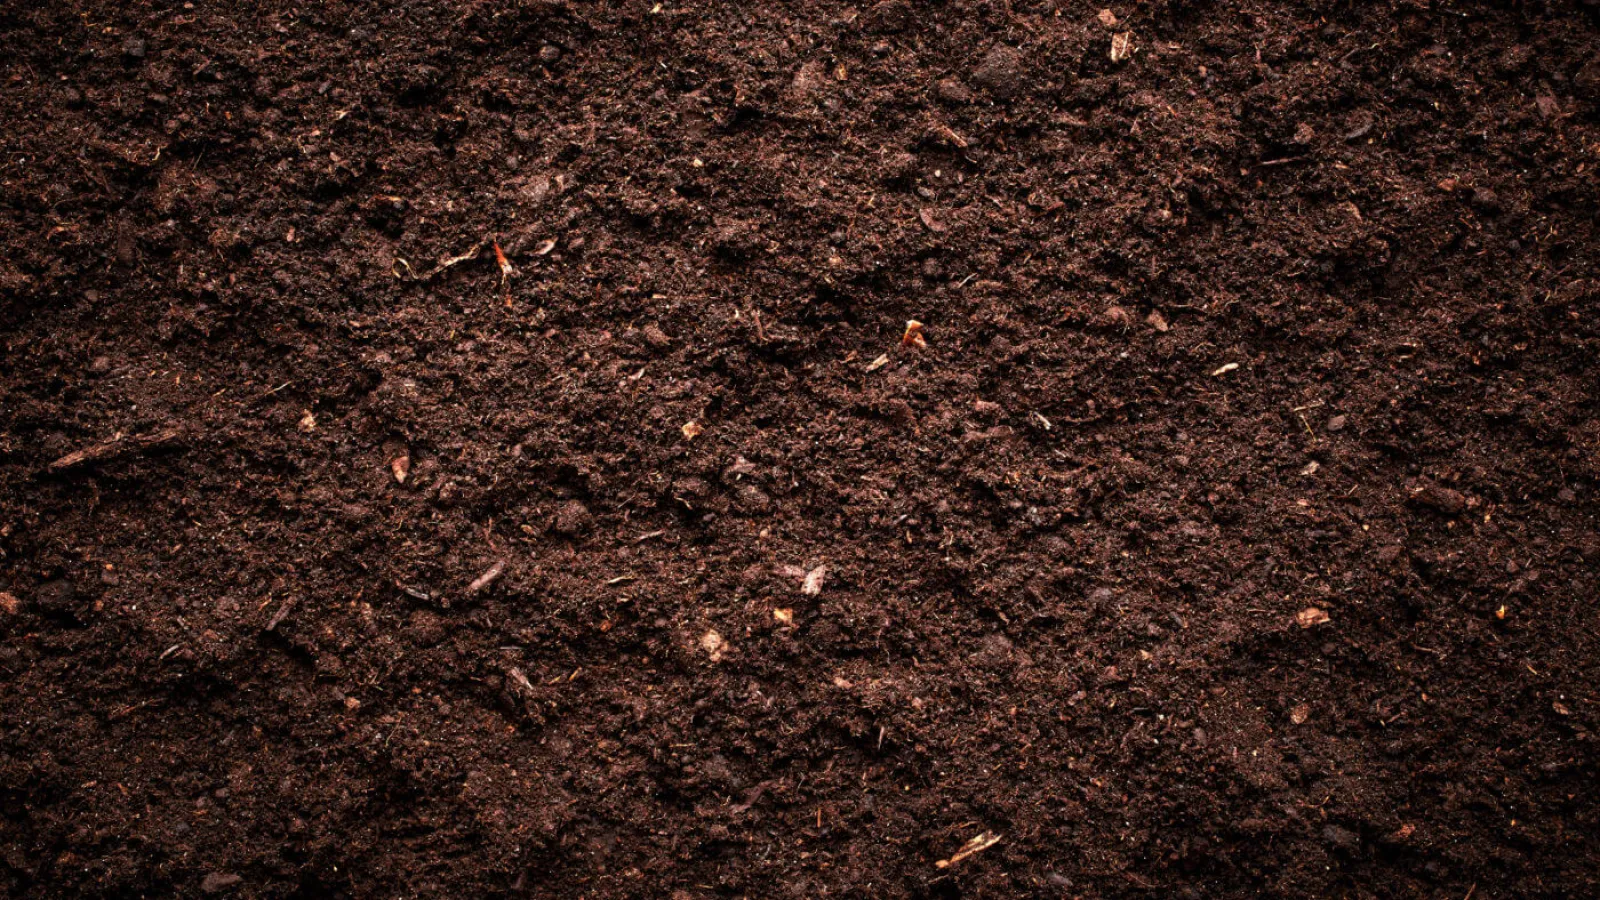 a close up of a dirt surface